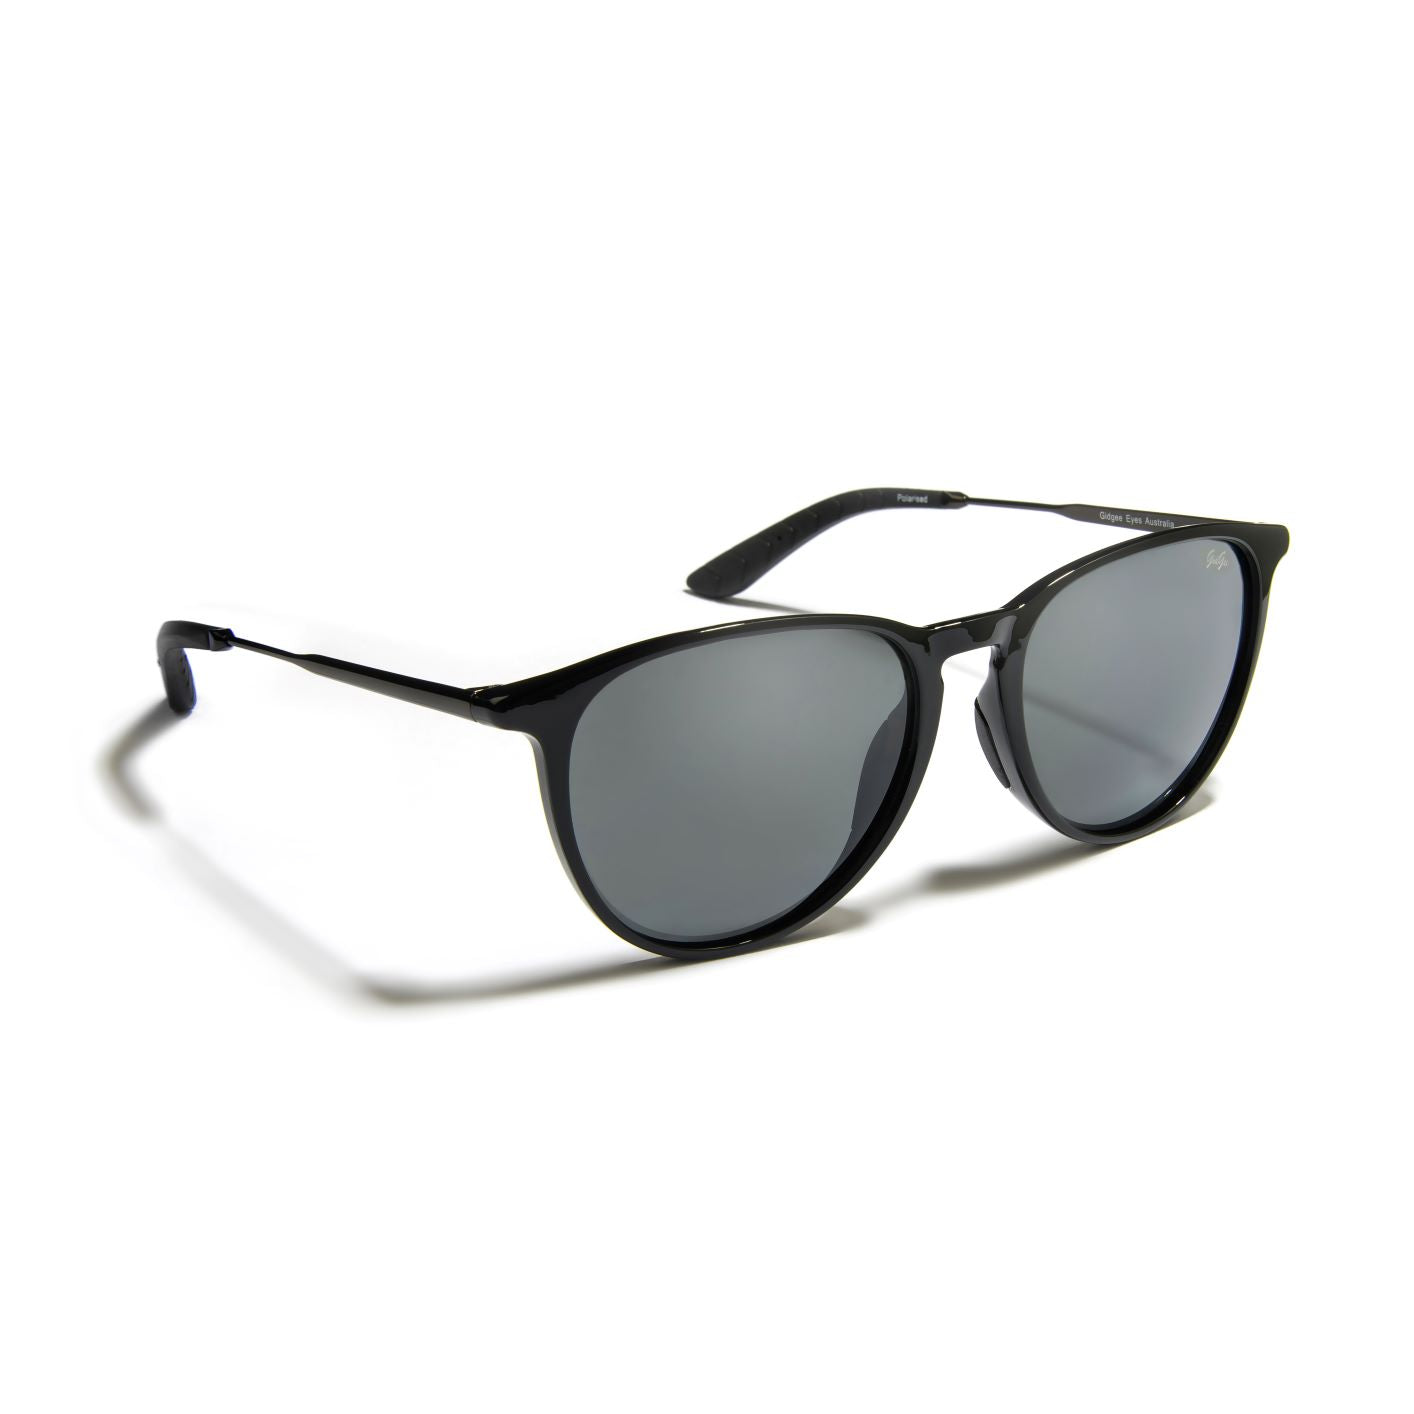 Charisma Sunglasses by Gidgee Eyewear